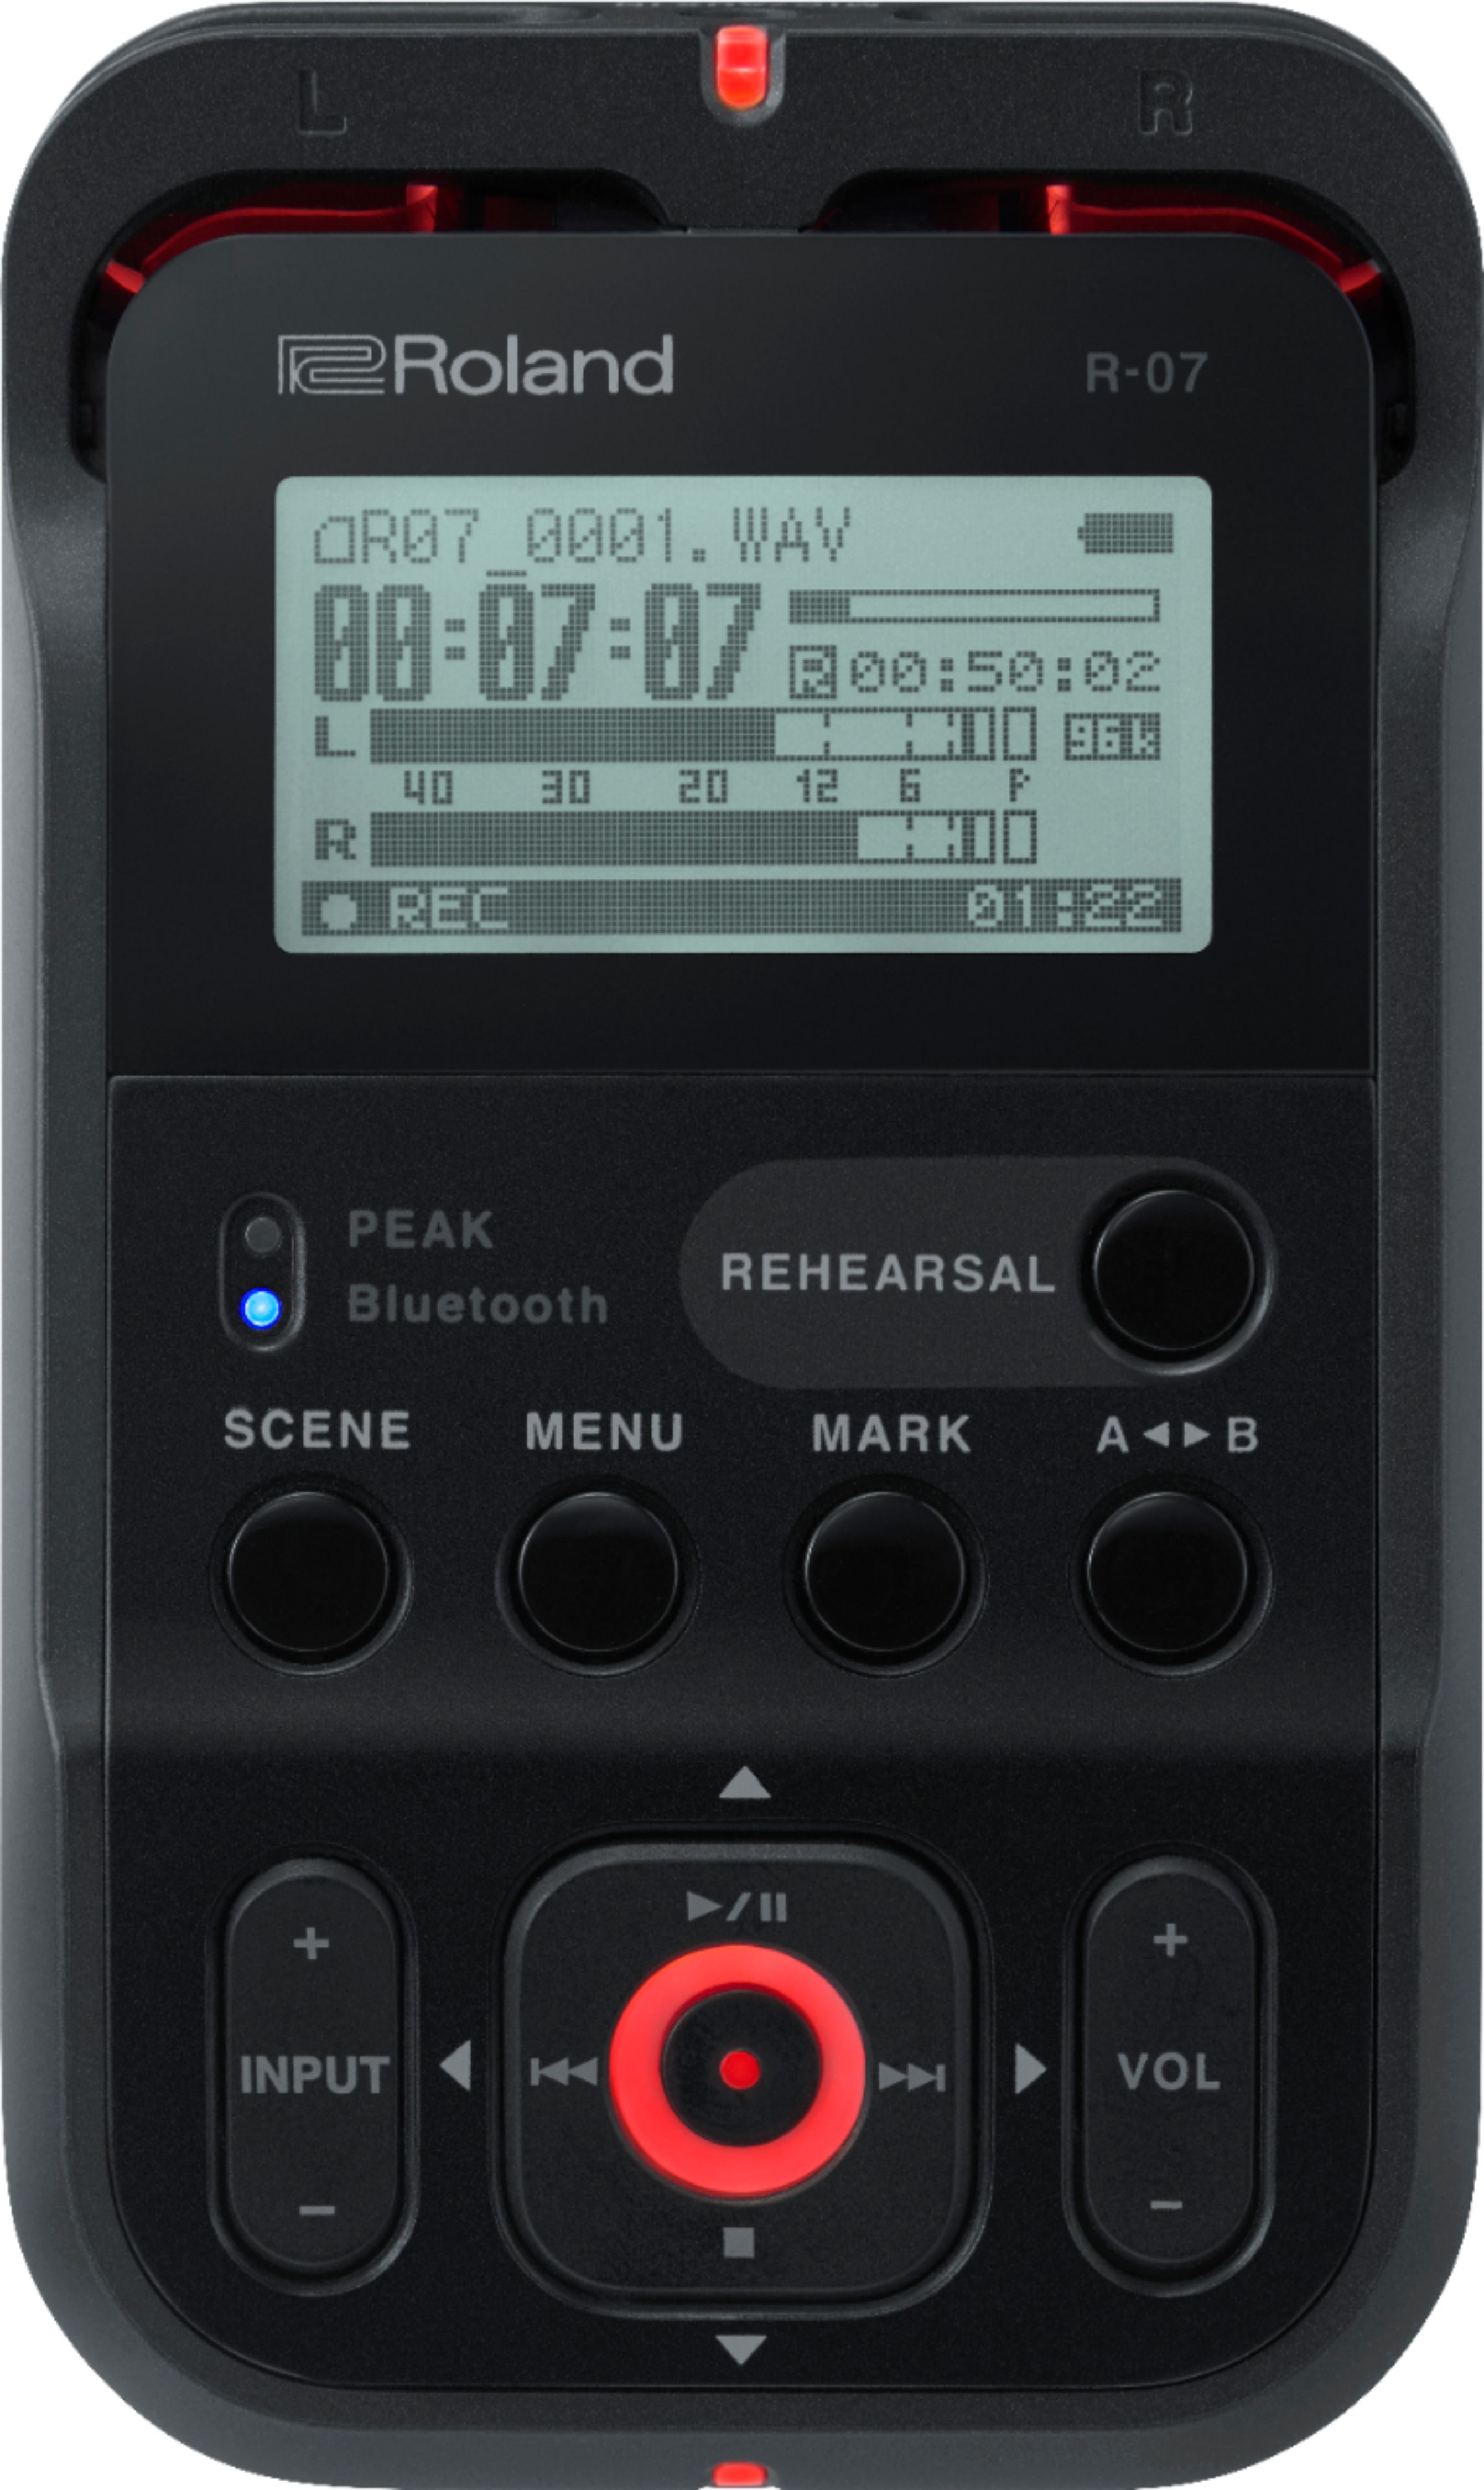 Roland - R-07 Handheld Audio Recorder - Black